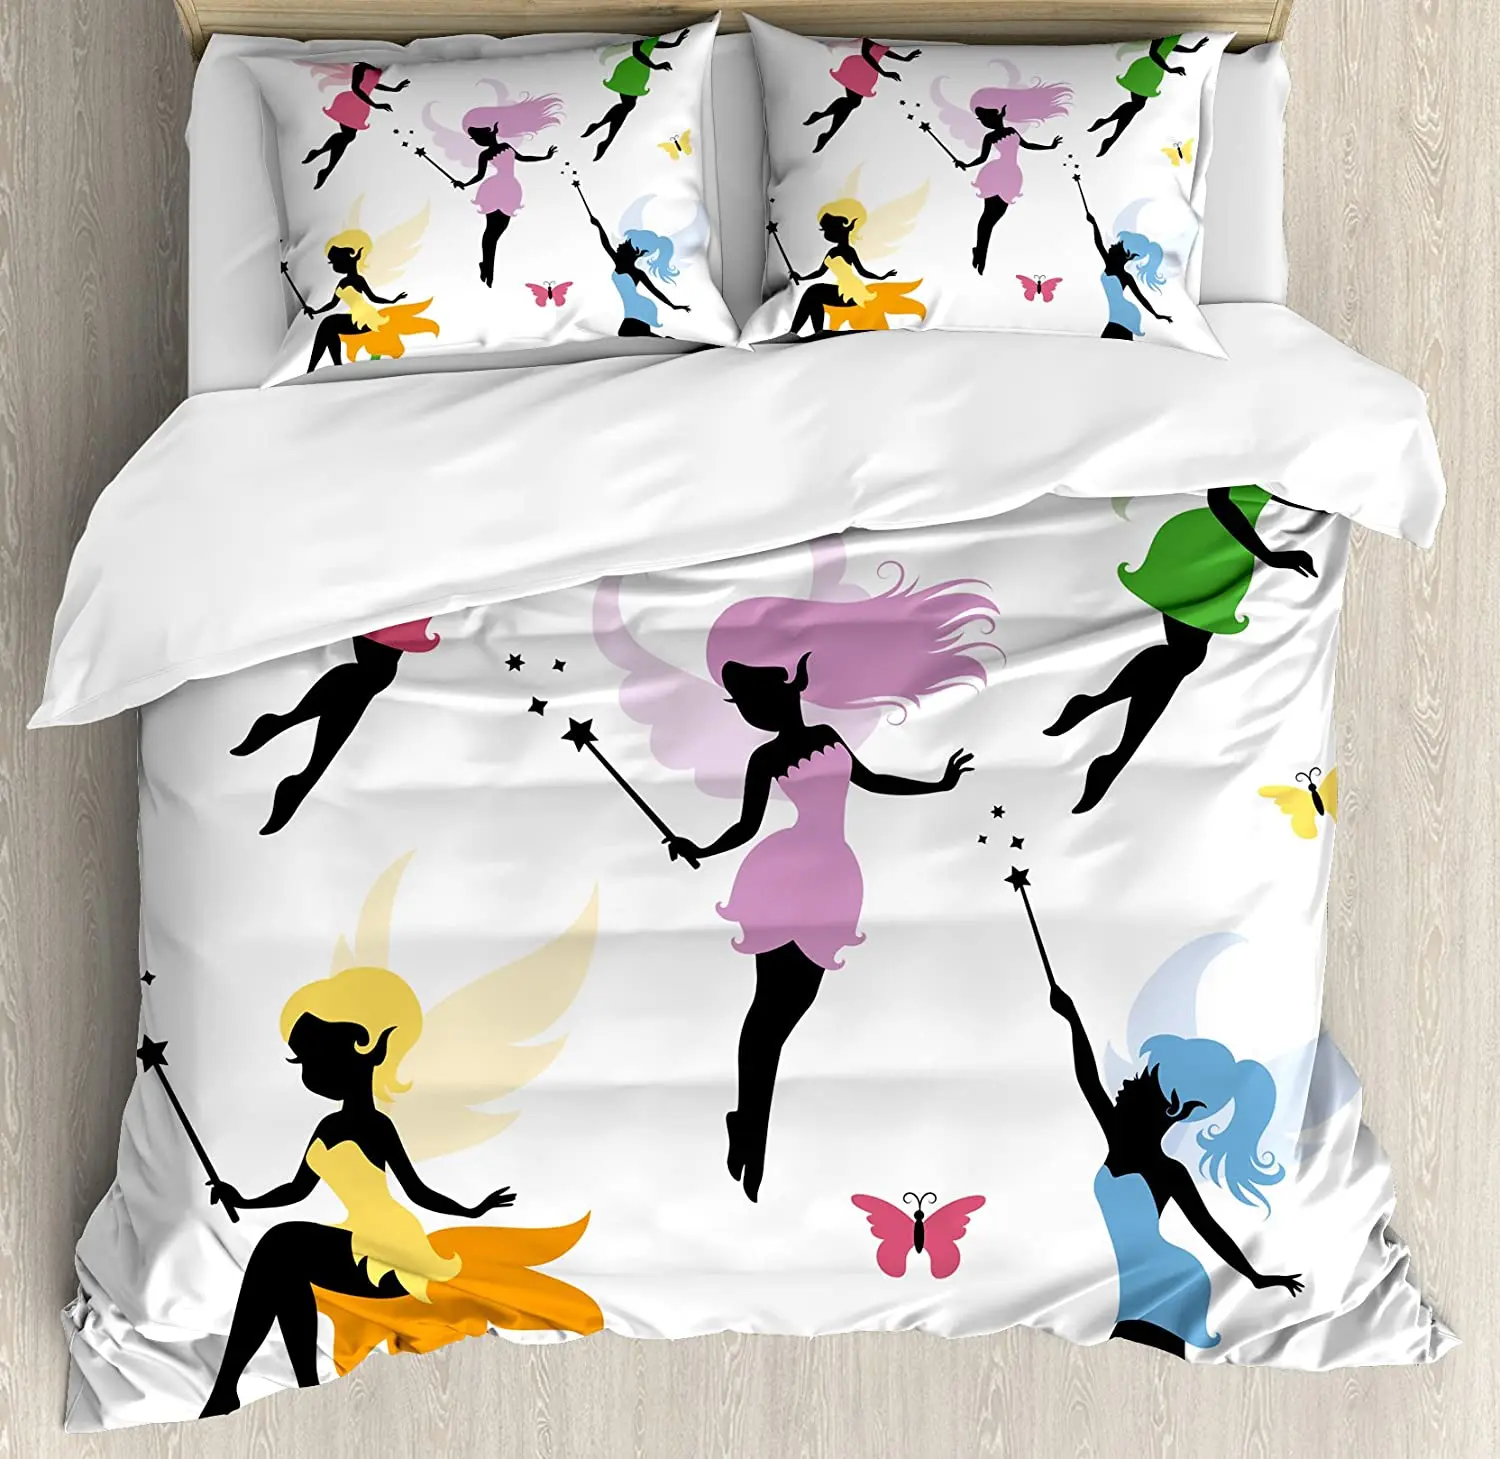 

Fantasy Bedding Set Cute Pixie Spirit Elf Fairies Flying wi 3pcs Duvet Cover Set Bed Set Quilt Cover Pillow Case Comforter Cover